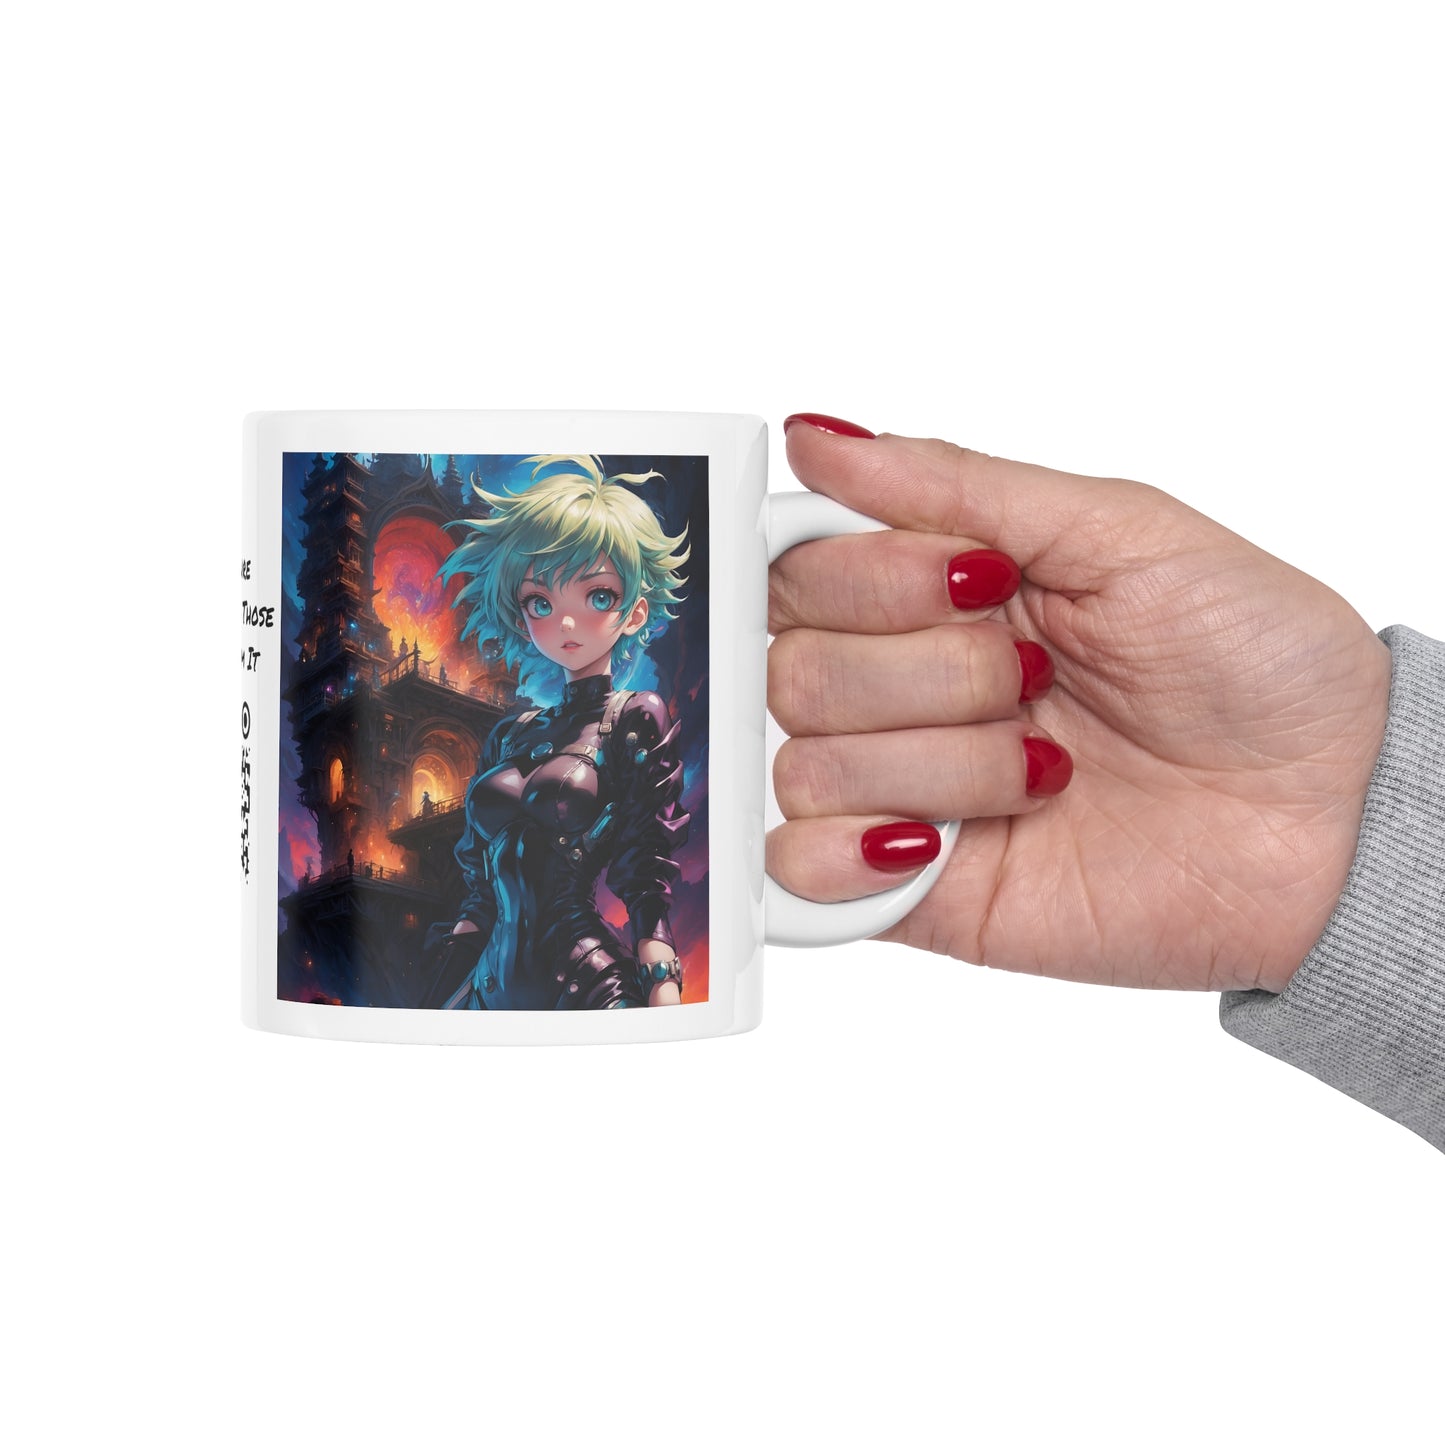 Portal Hottie | HD Graphic | Fantasy Girl | Gamer | Anime | Manga | Coffee | Tea | Hot Chocolate | 11oz | White Mug